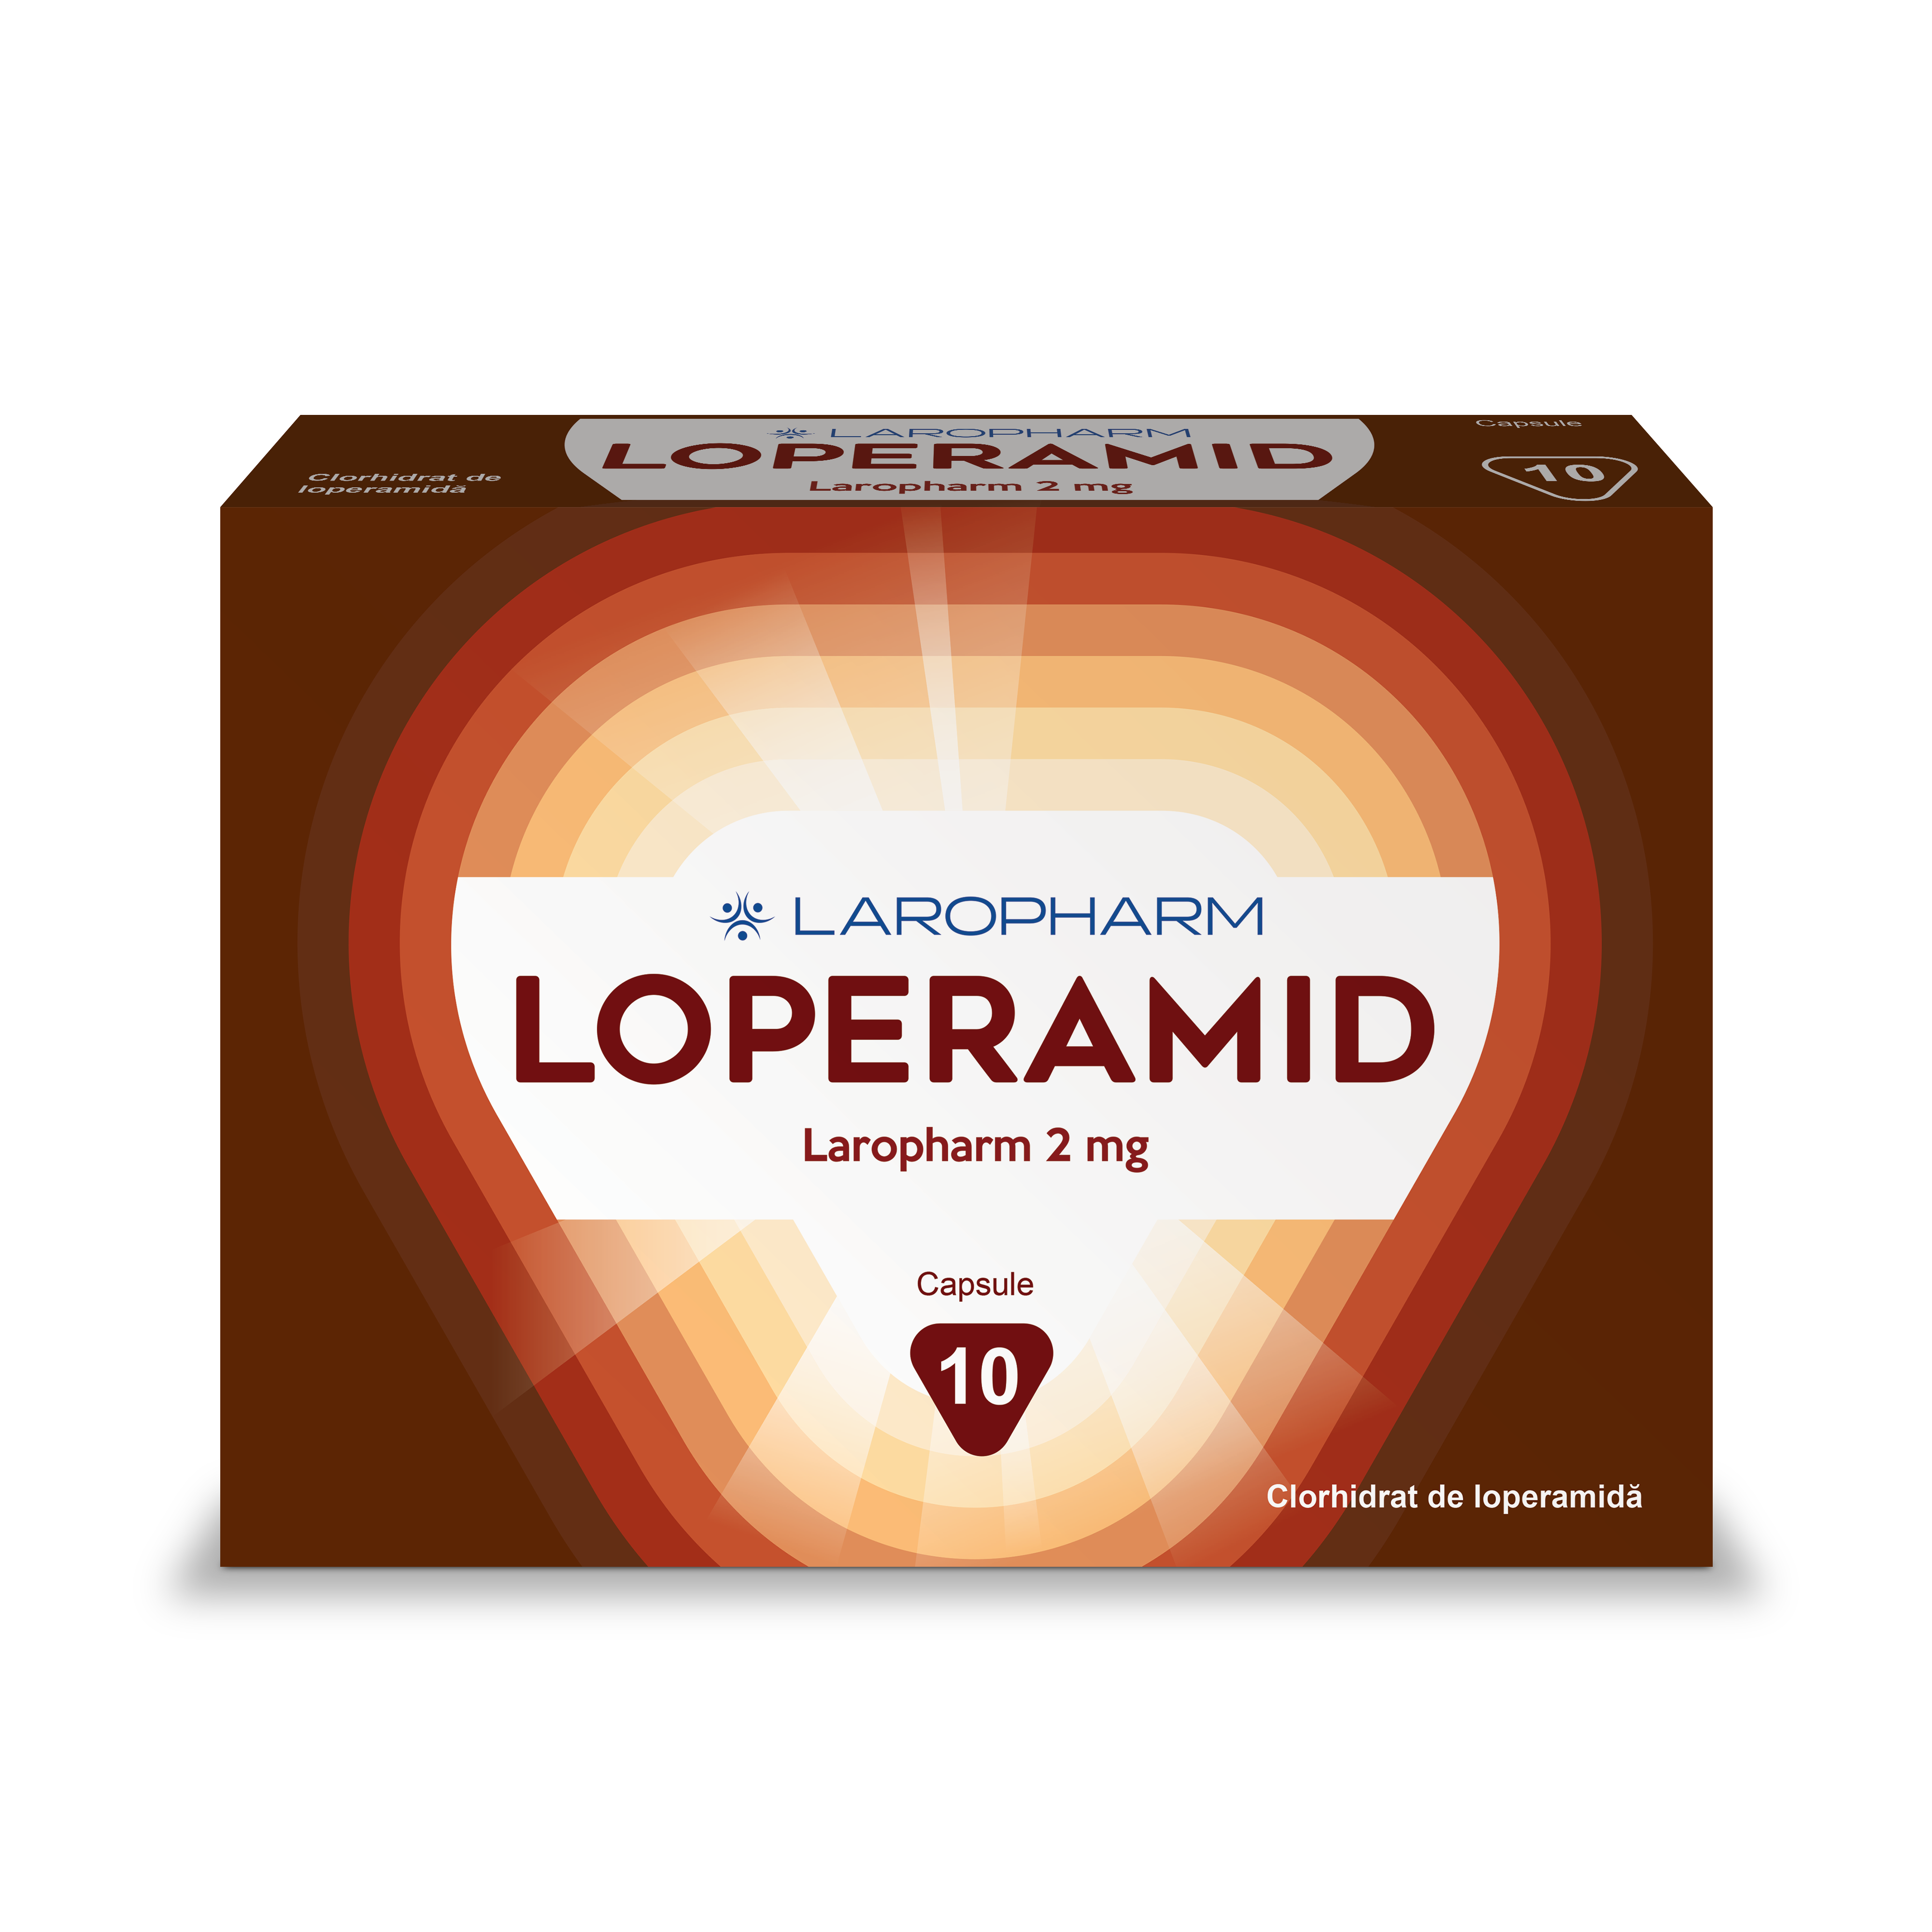 Loperamid 2mg, Laropharm | 10 capsule